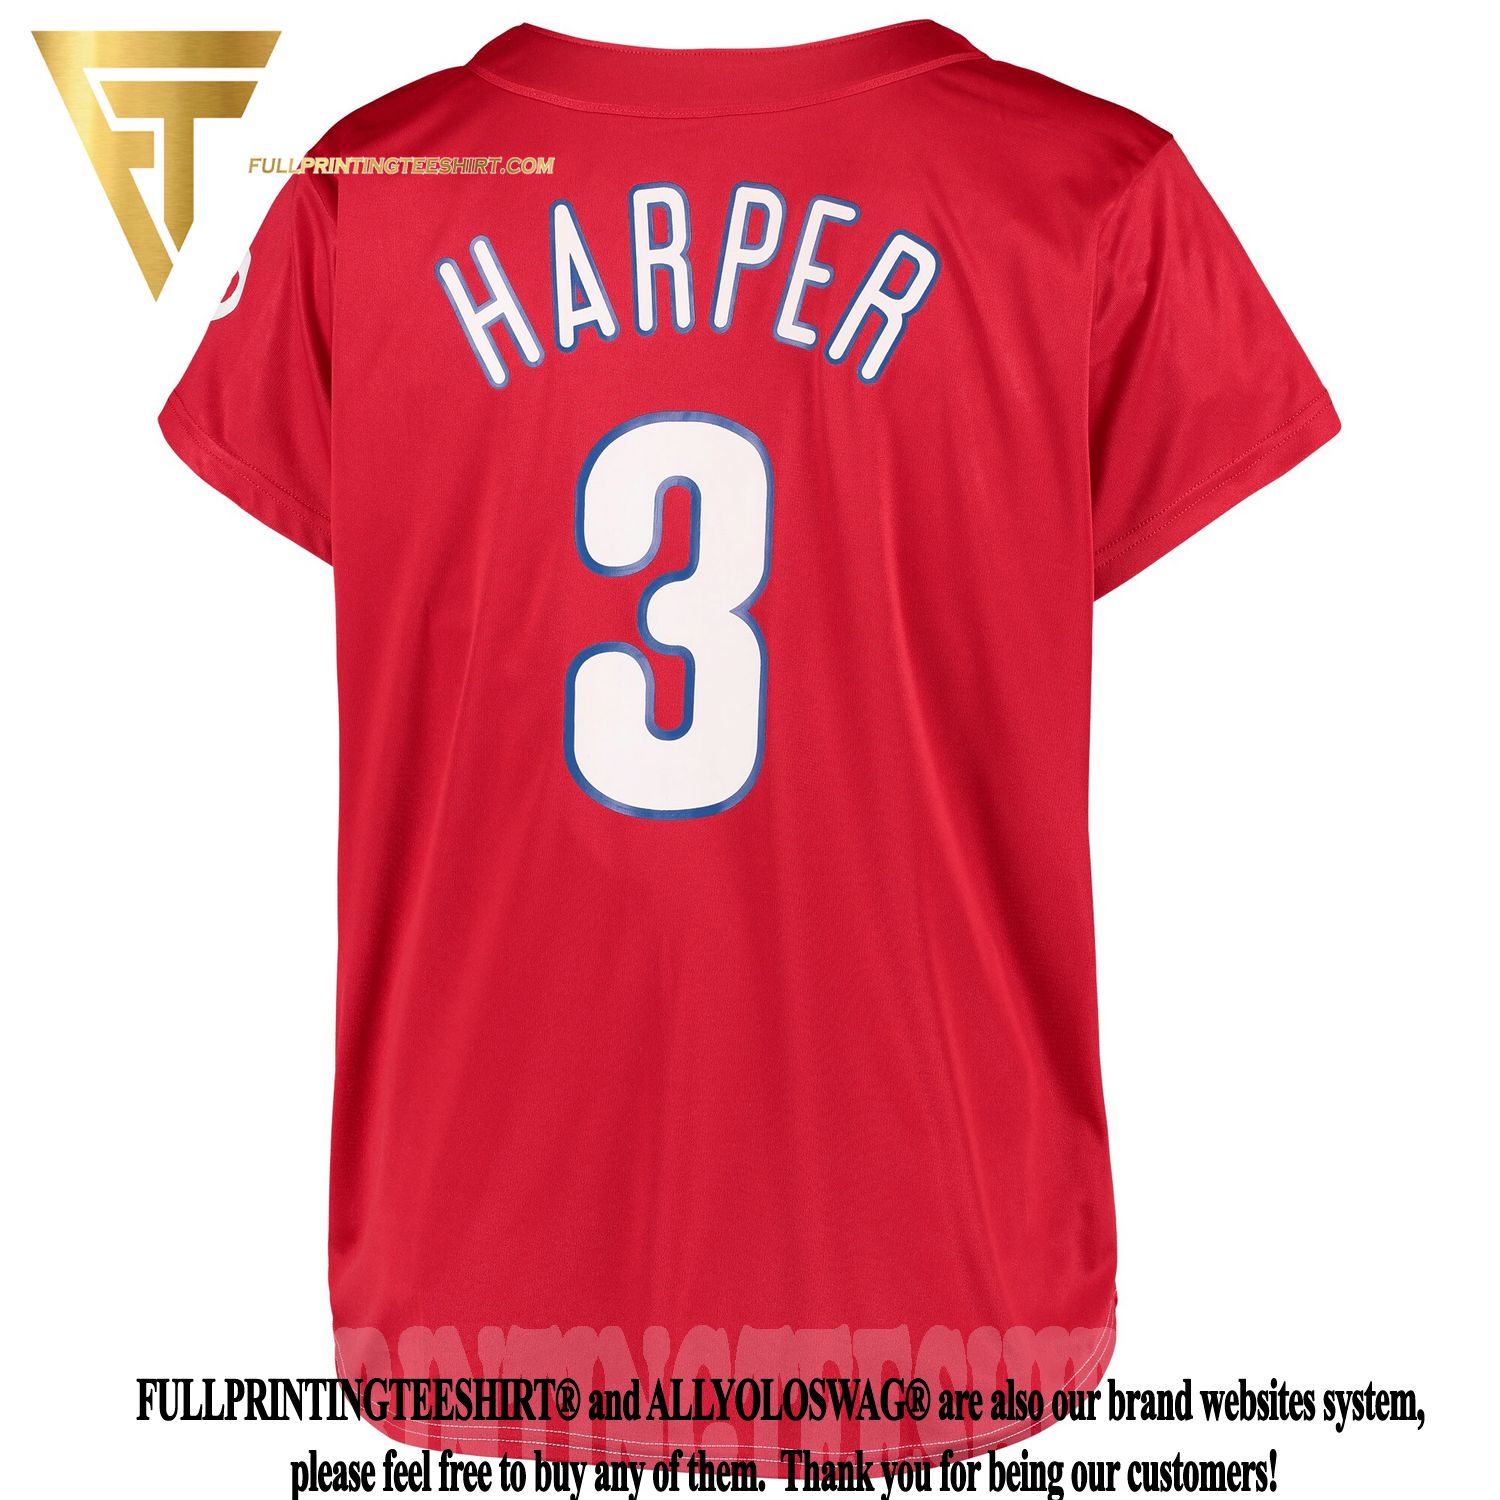 Top-selling Item] Bryce Harper Gray Red Philadelphia Phillies Plus